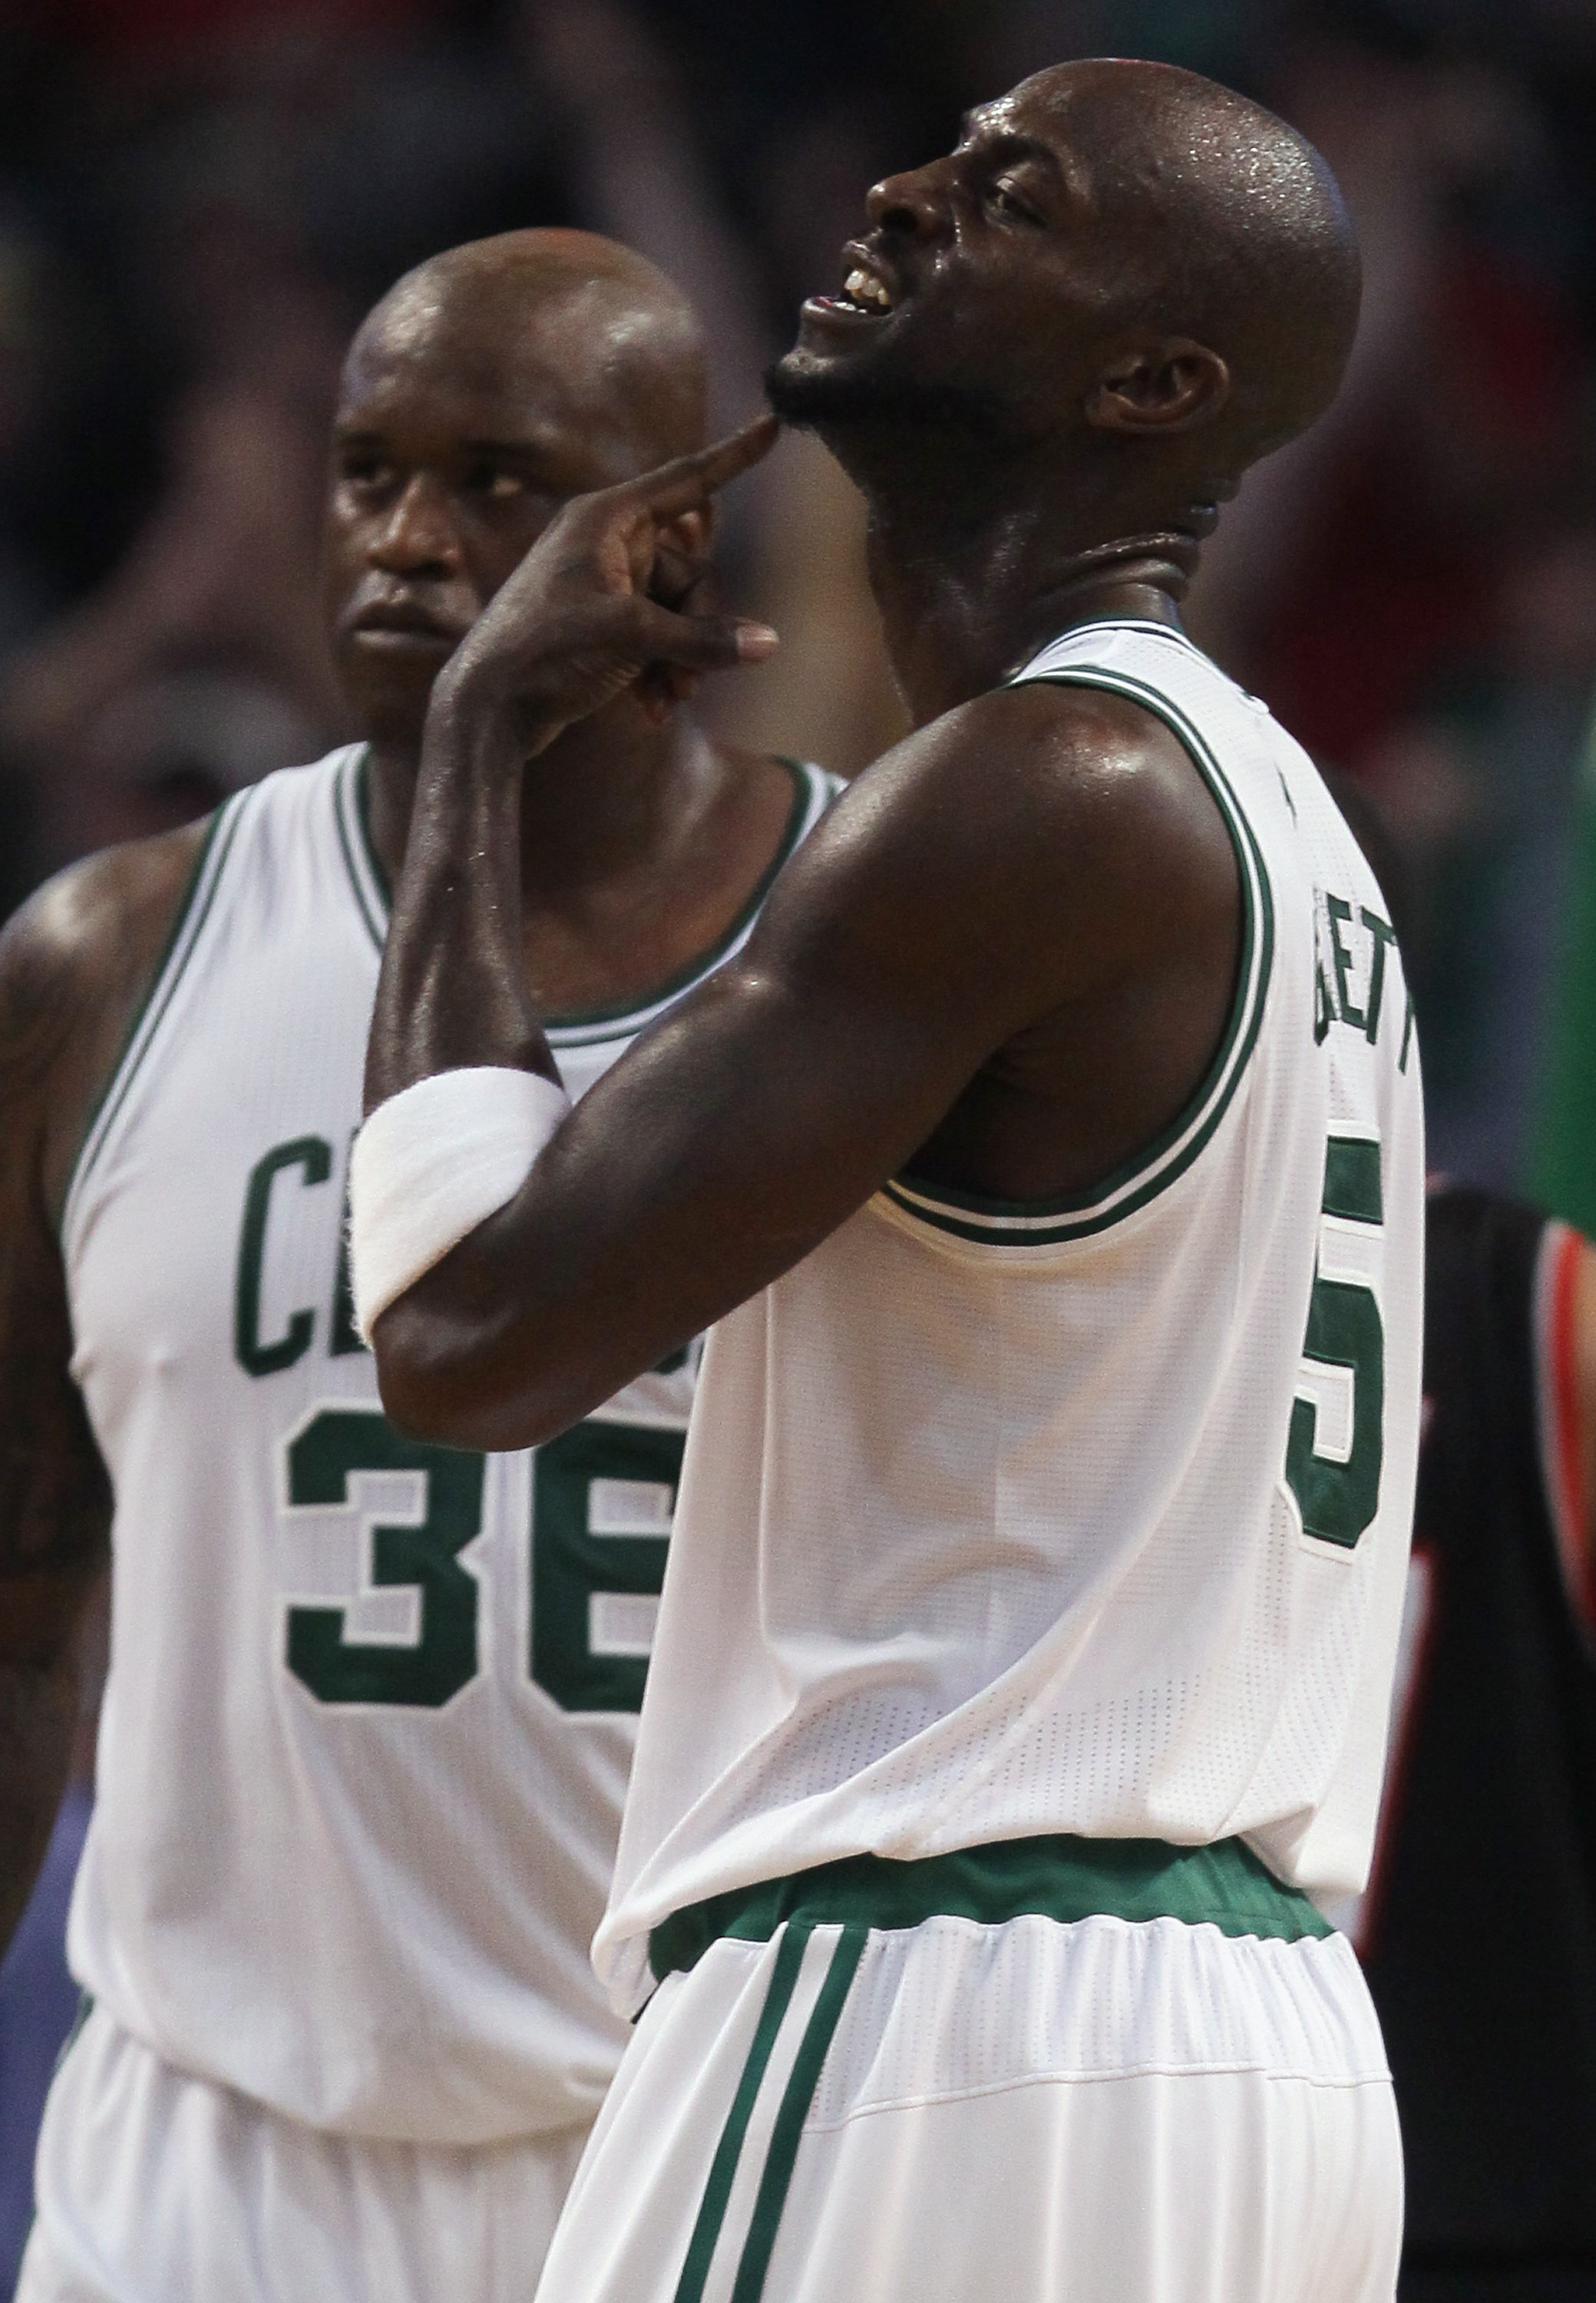 Carlos Arroyo - Boston Celtics Point Guard - ESPN